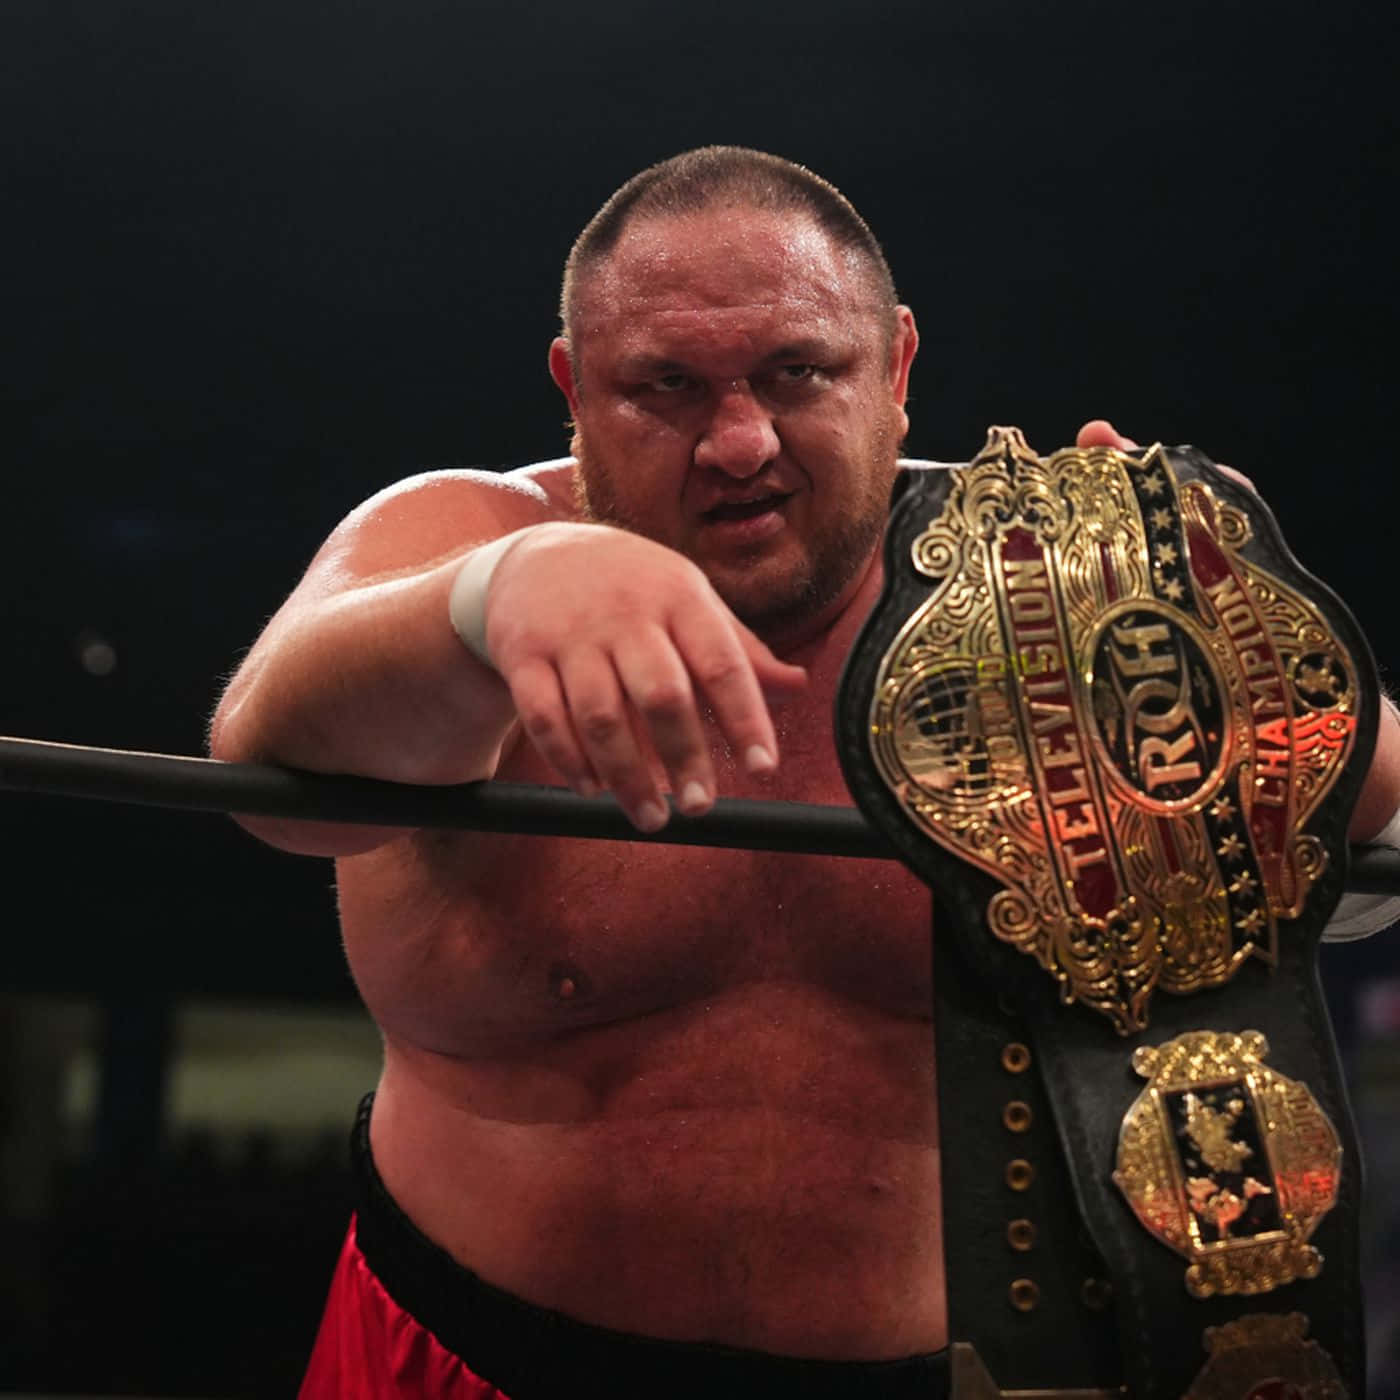 Samoa Joe Proudly Displaying The Roh Championship Belt